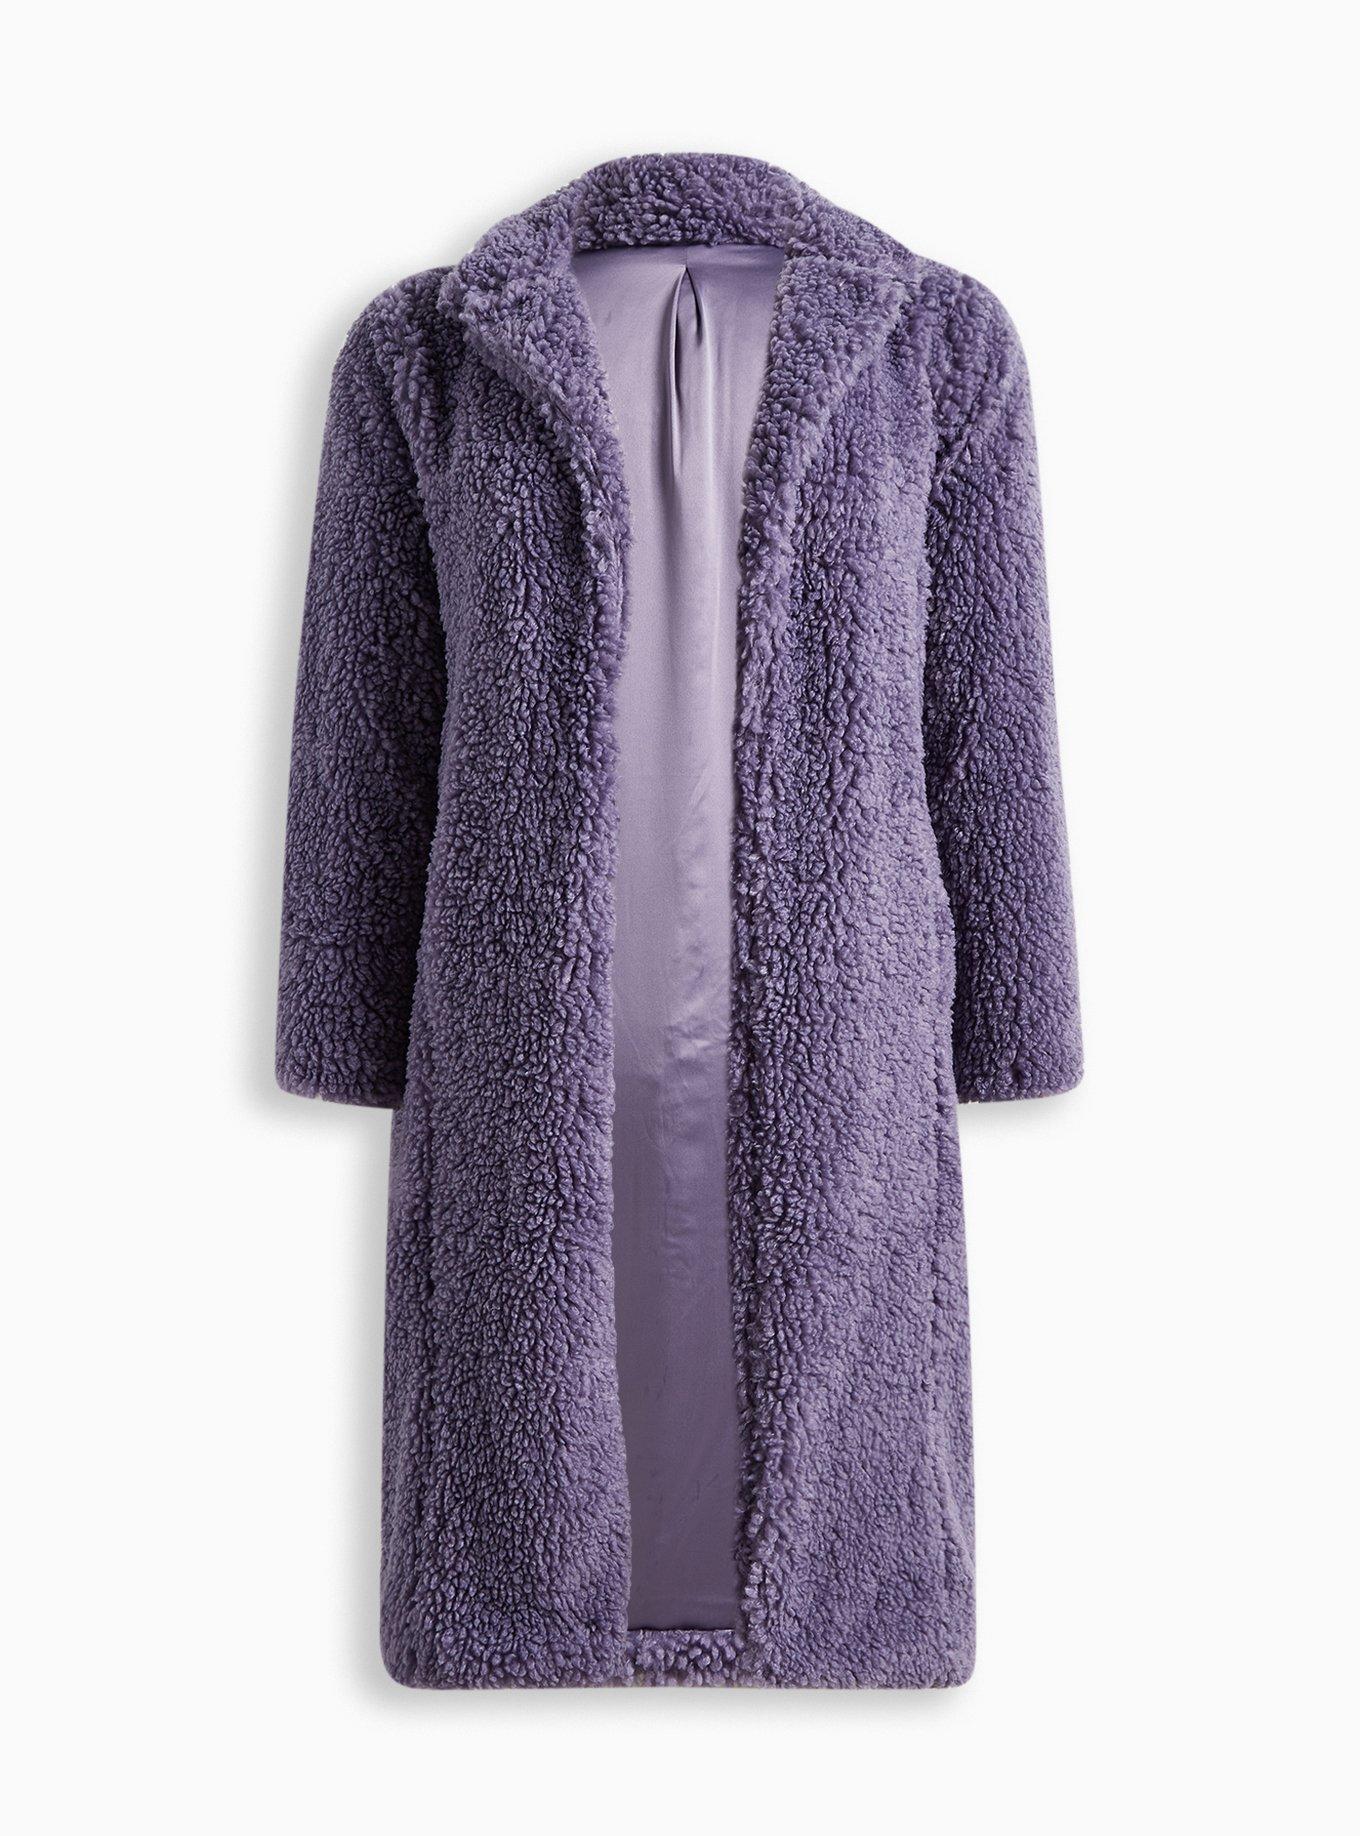 Plus Size - Outlander Jaime Grey Faux Fur Trim Woolen Swing Coat - Torrid